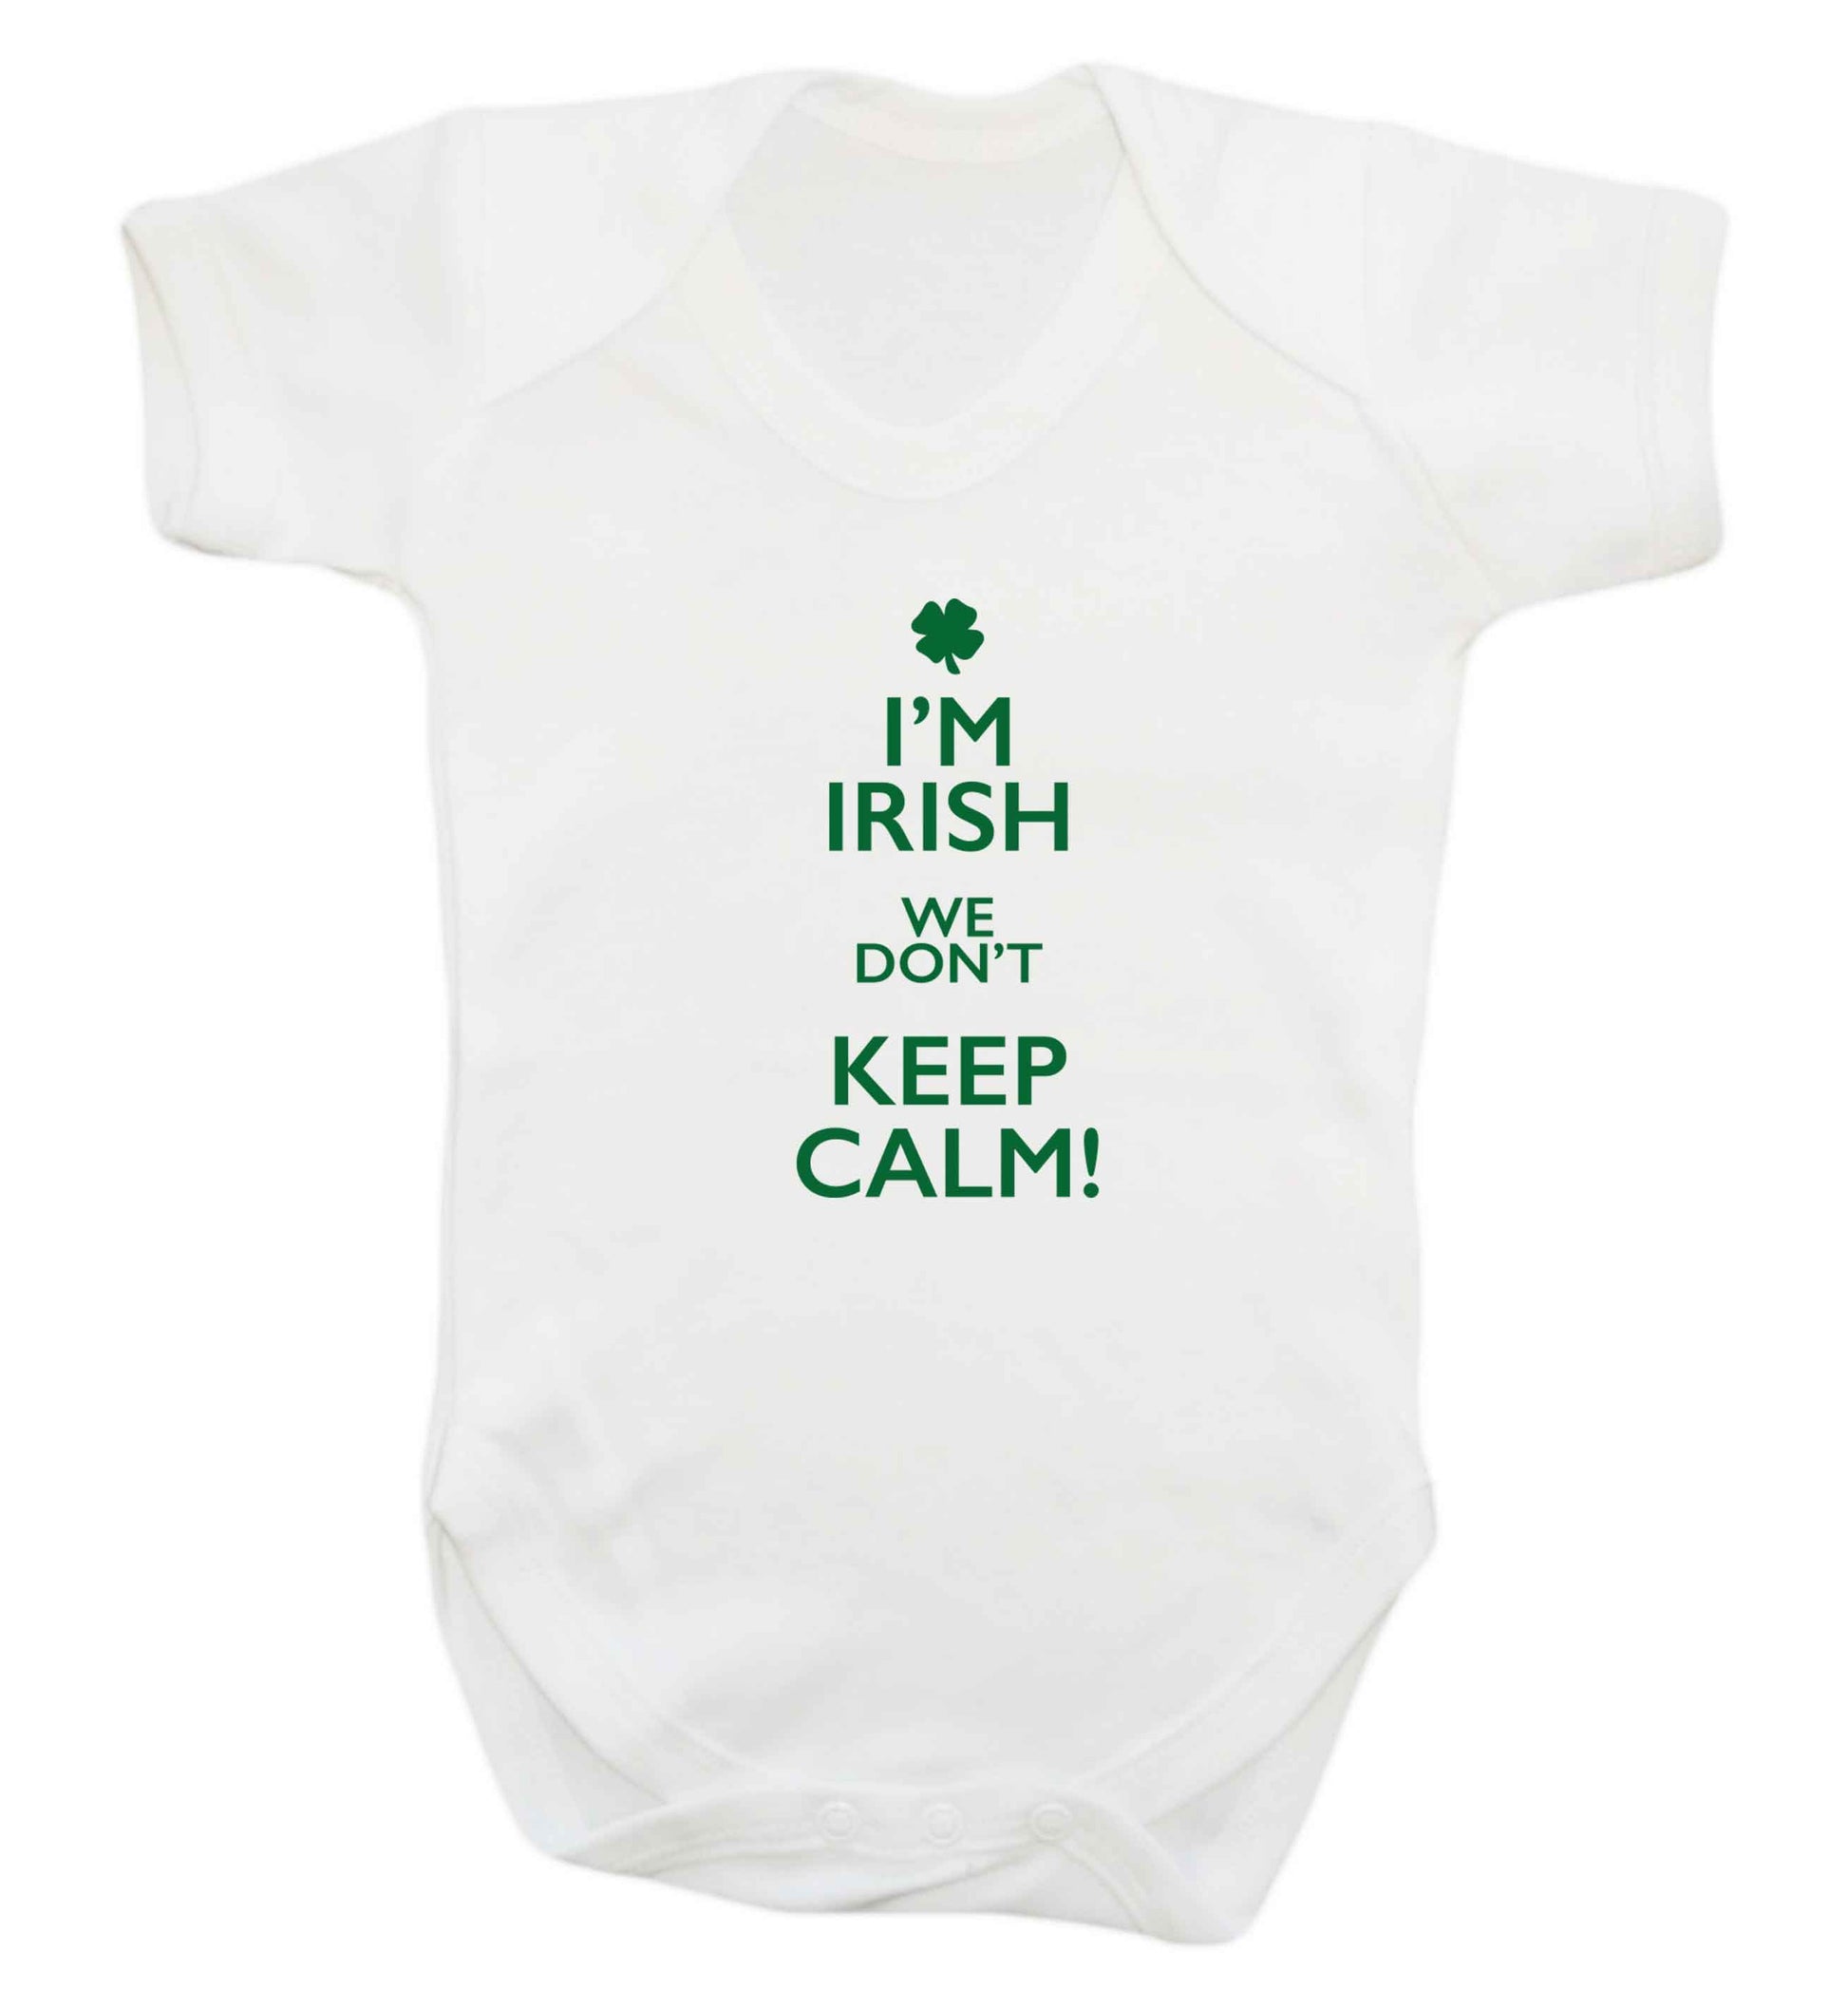 I'm Irish we don't keep calm baby vest white 18-24 months